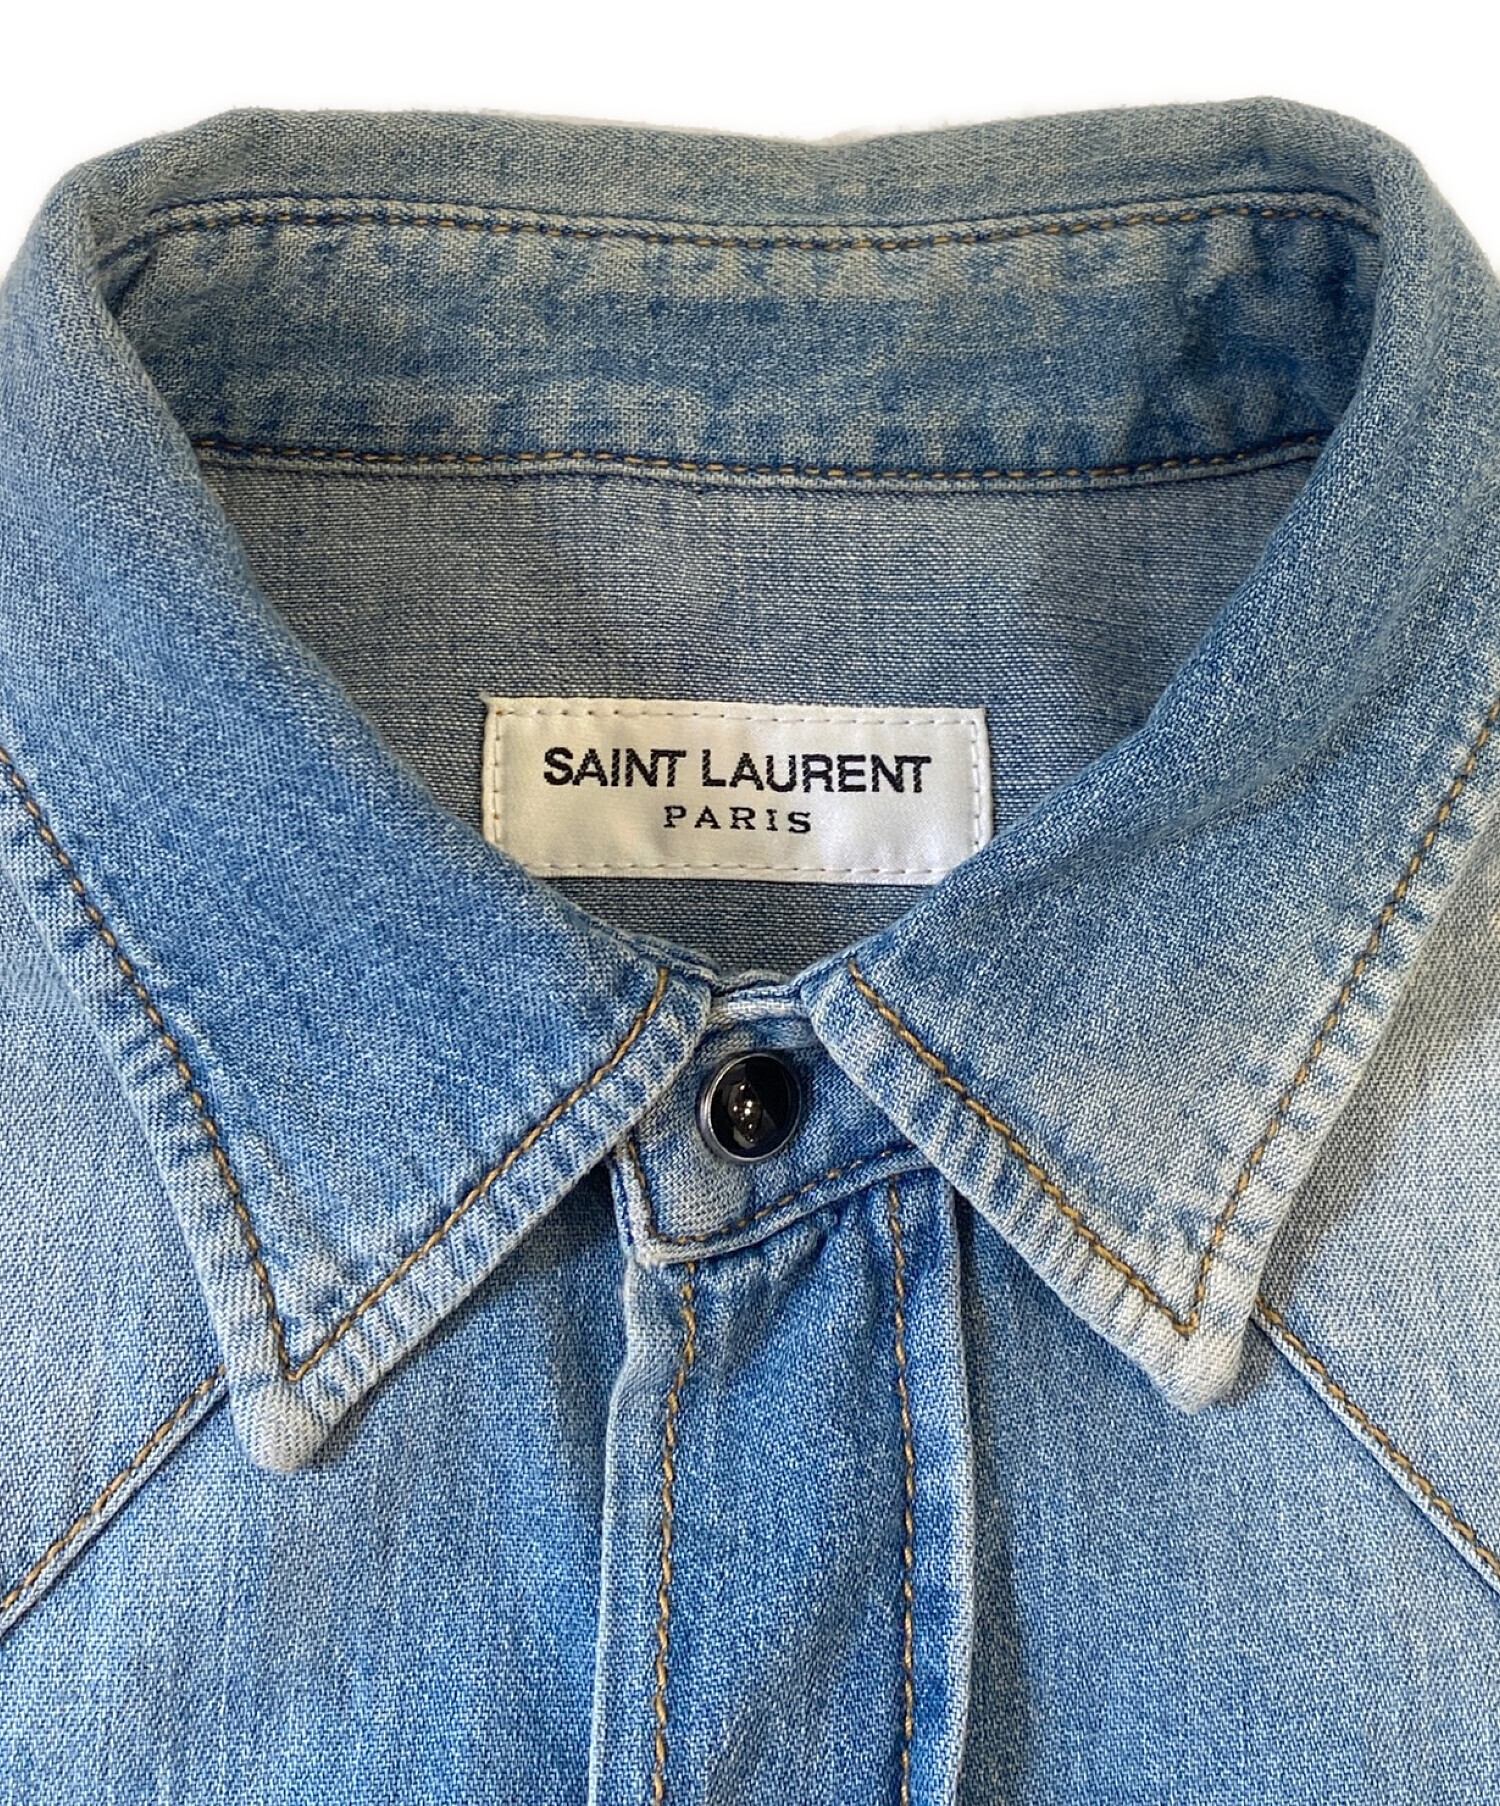 Saint Laurent Paris (サンローランパリ) ダメージ加工ウエスタンデニムシャツ インディゴ サイズ:XS